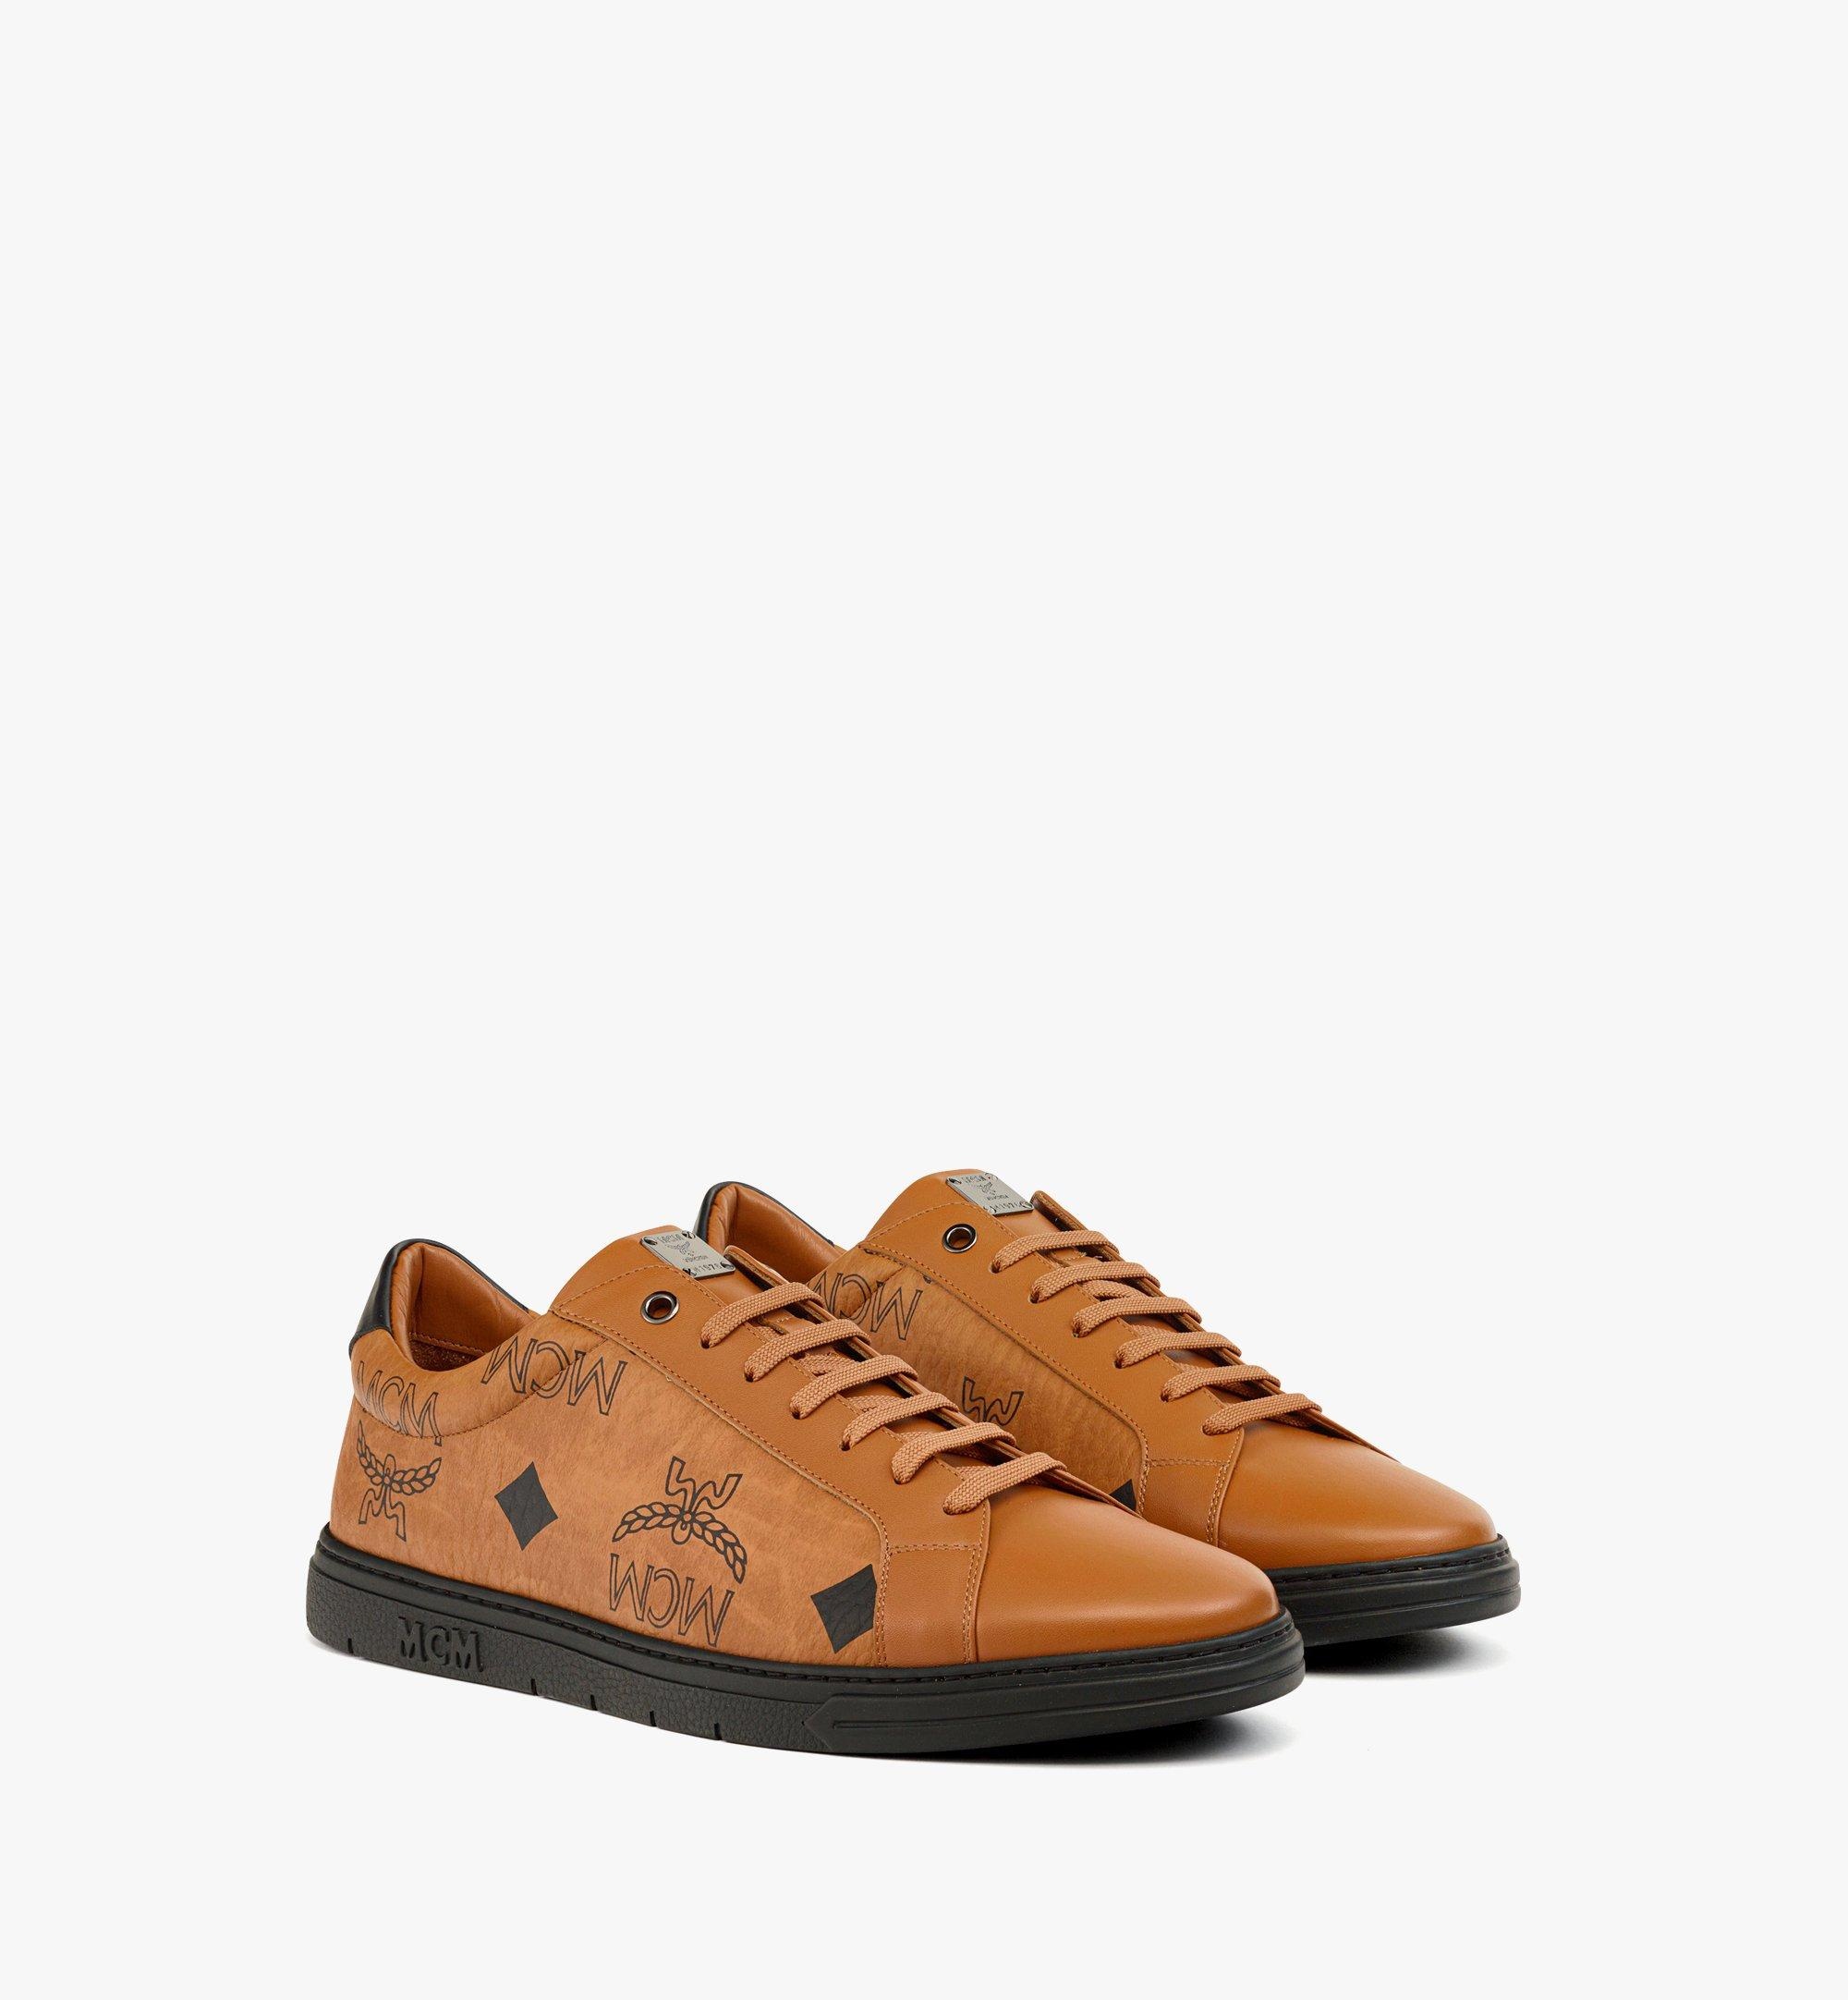 Terrain Lo Sneakers in Maxi Visetos - 1